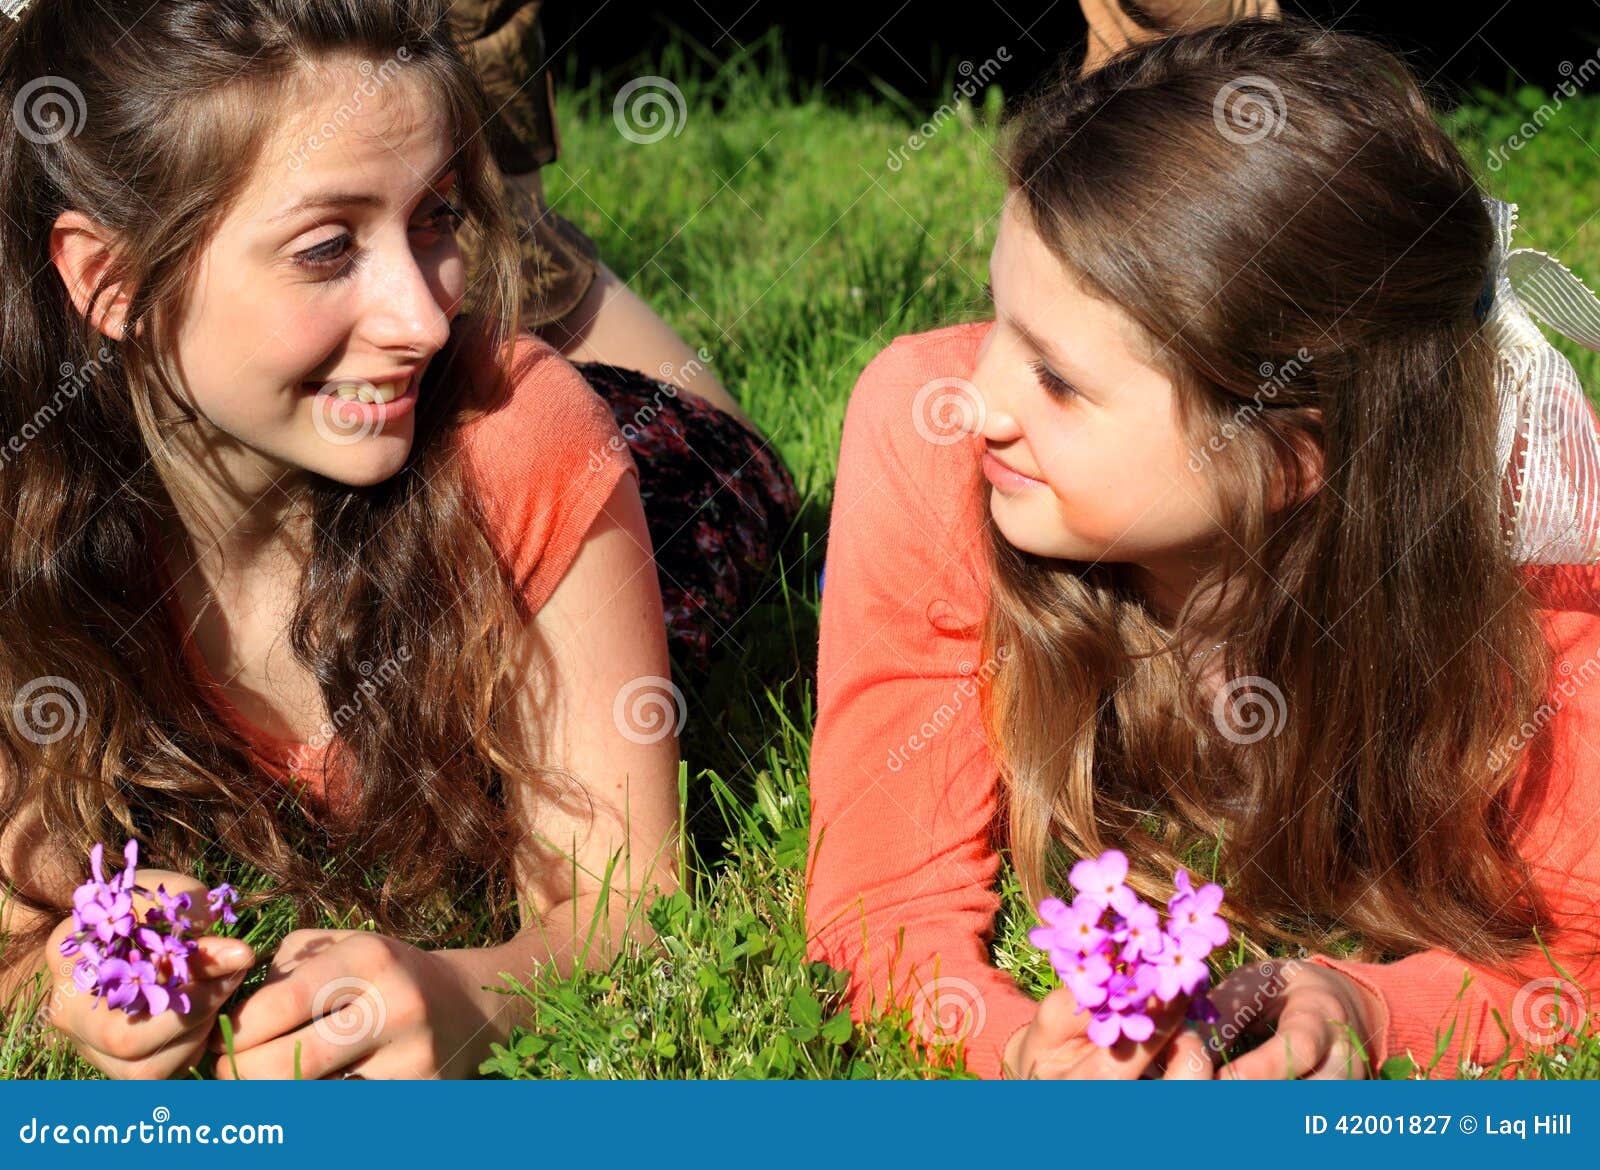 Sweet Teen Bff Girls Stock Image Image Of Flower Friends 42001827